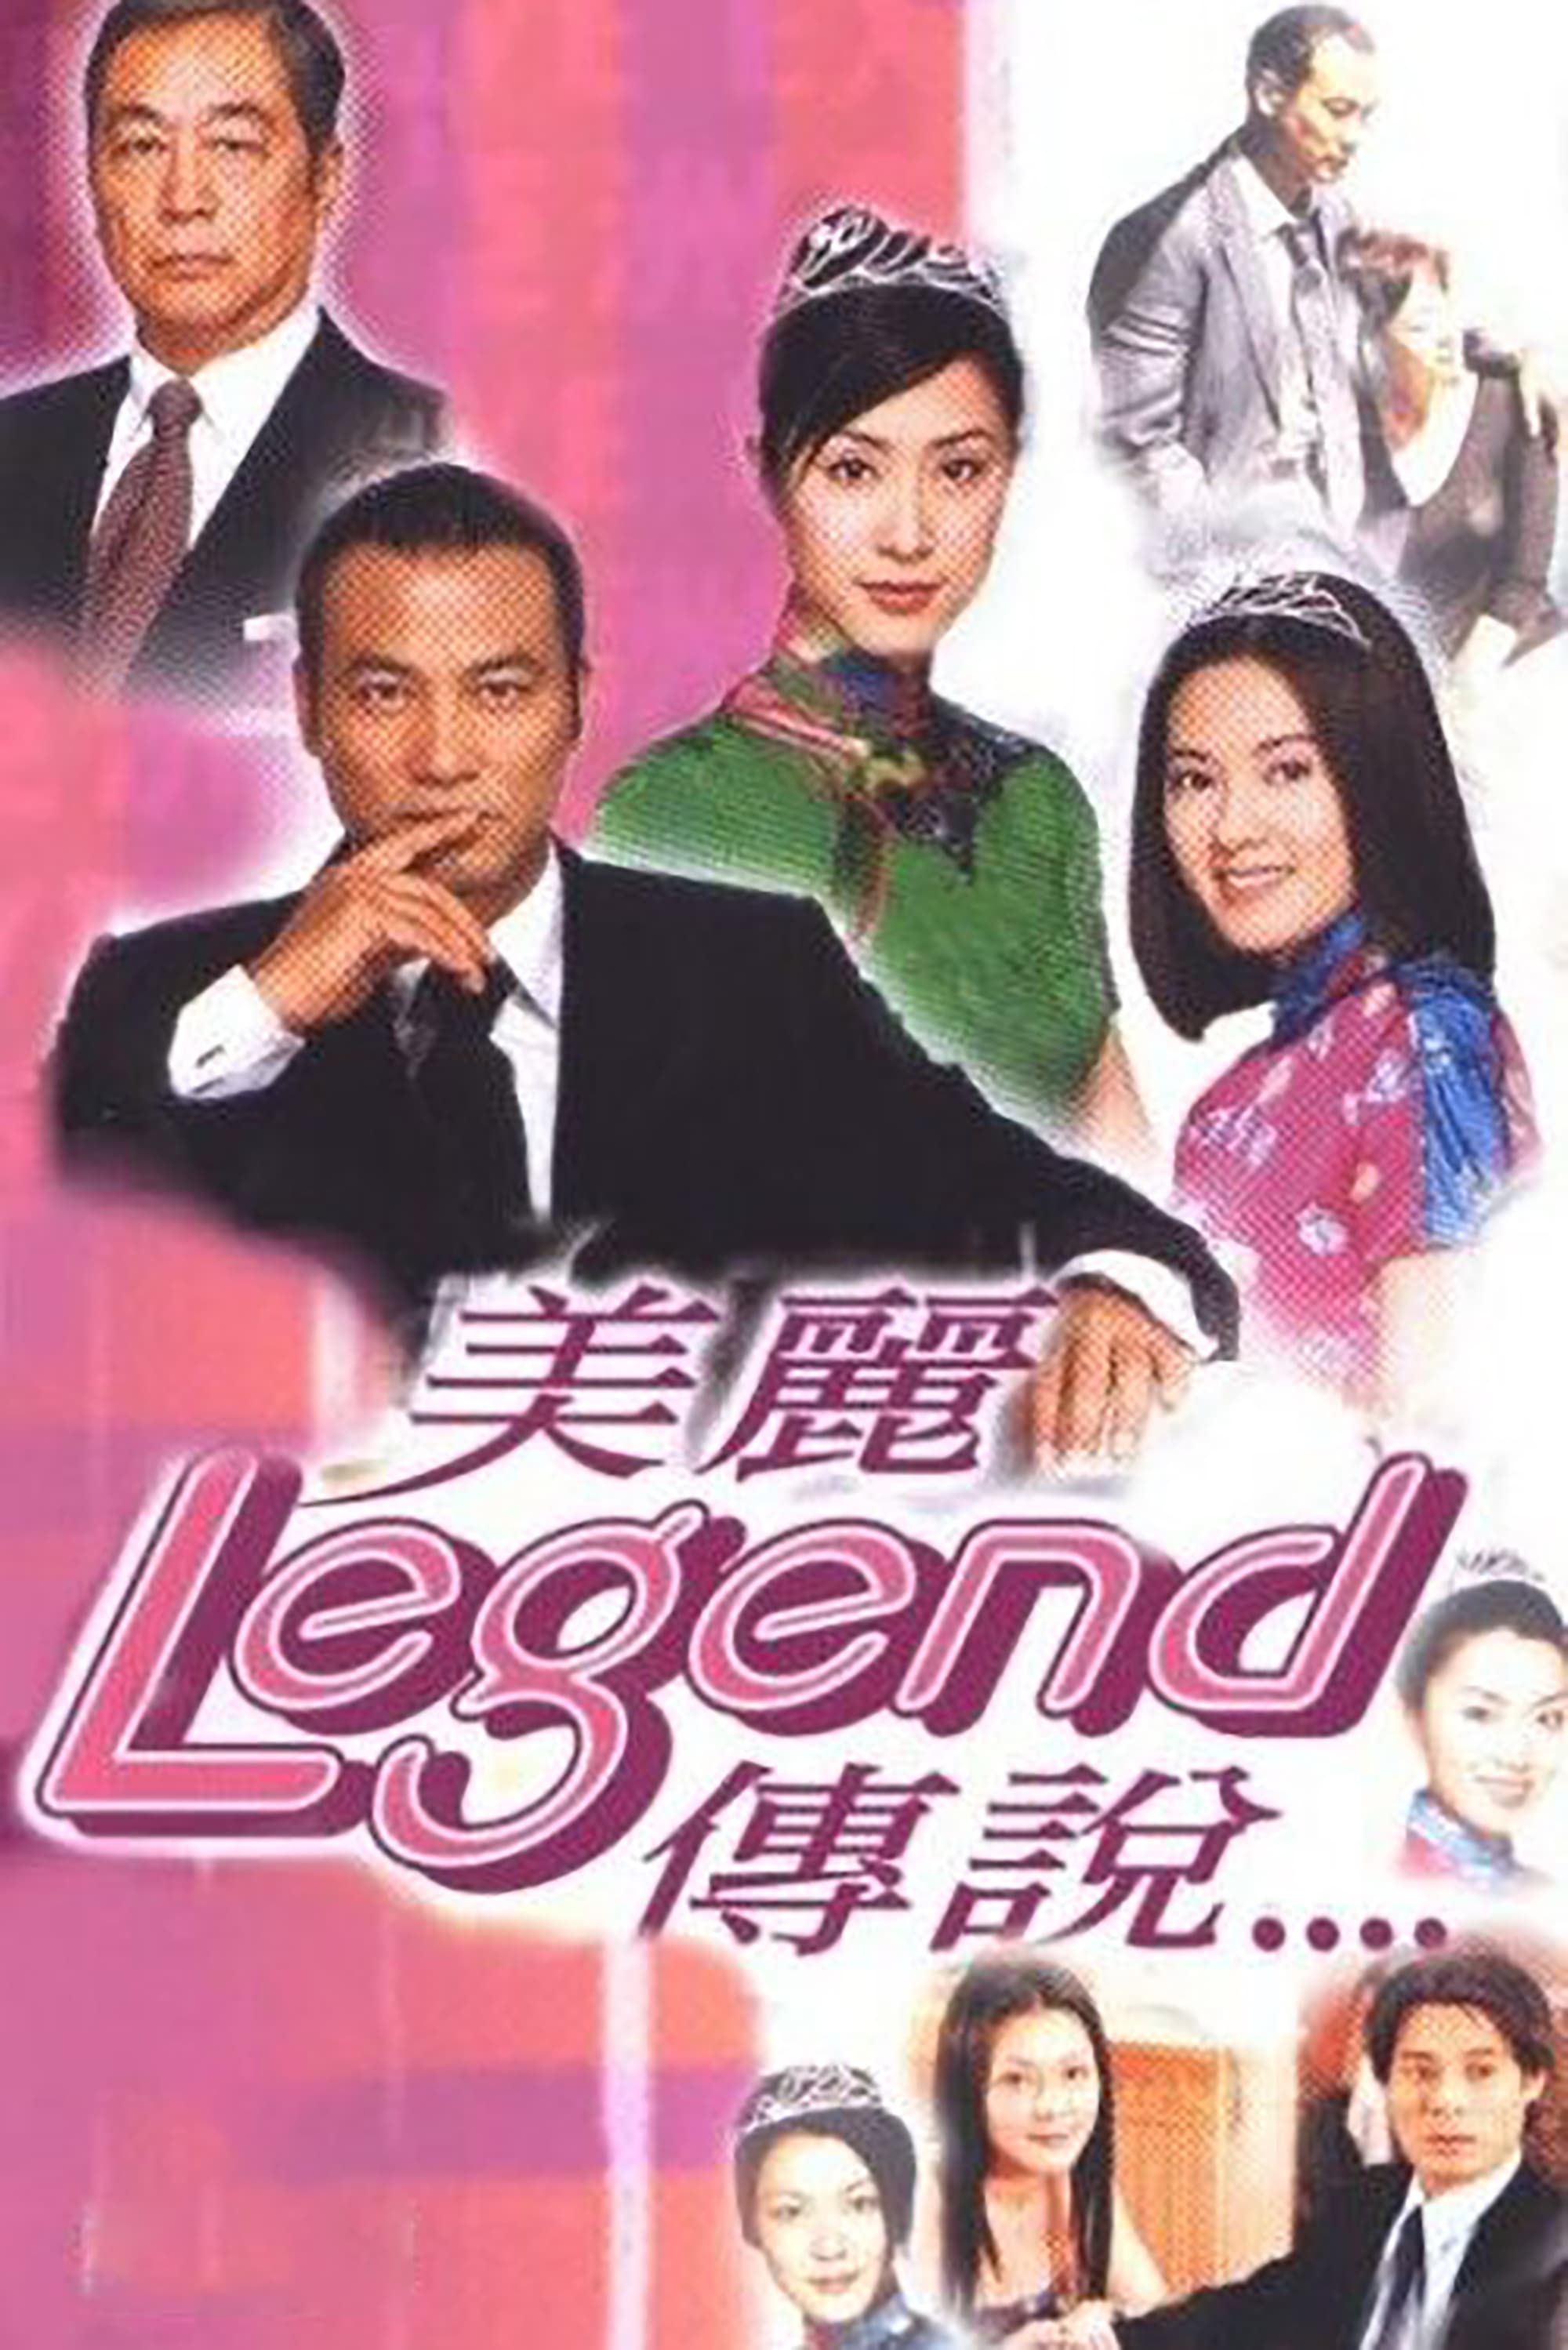 Legend (2000)